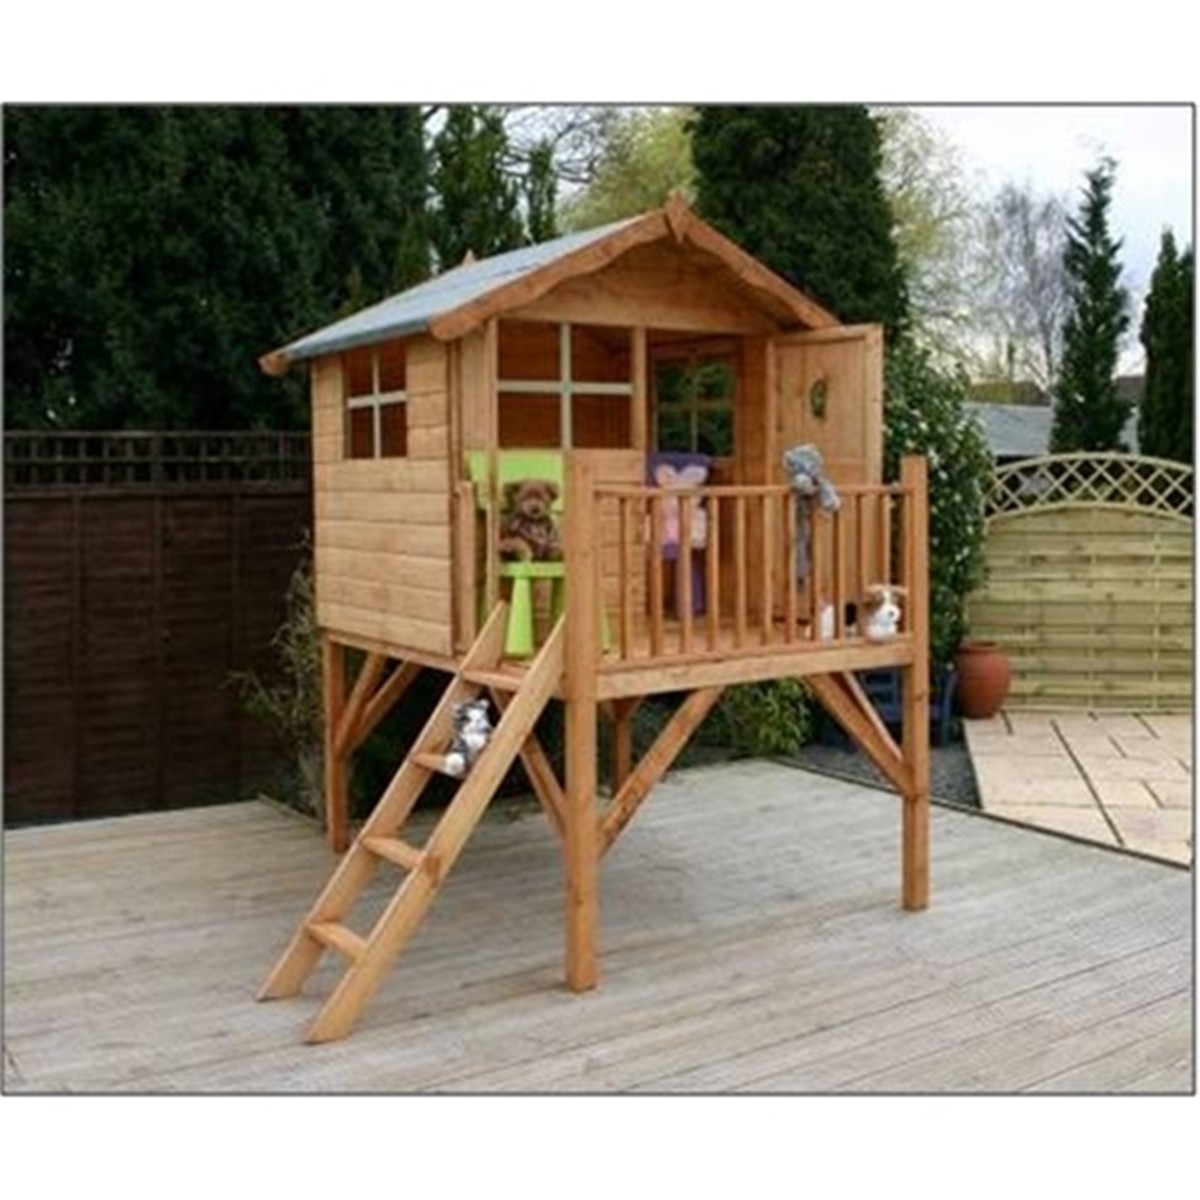 Wood outdoor playhouse